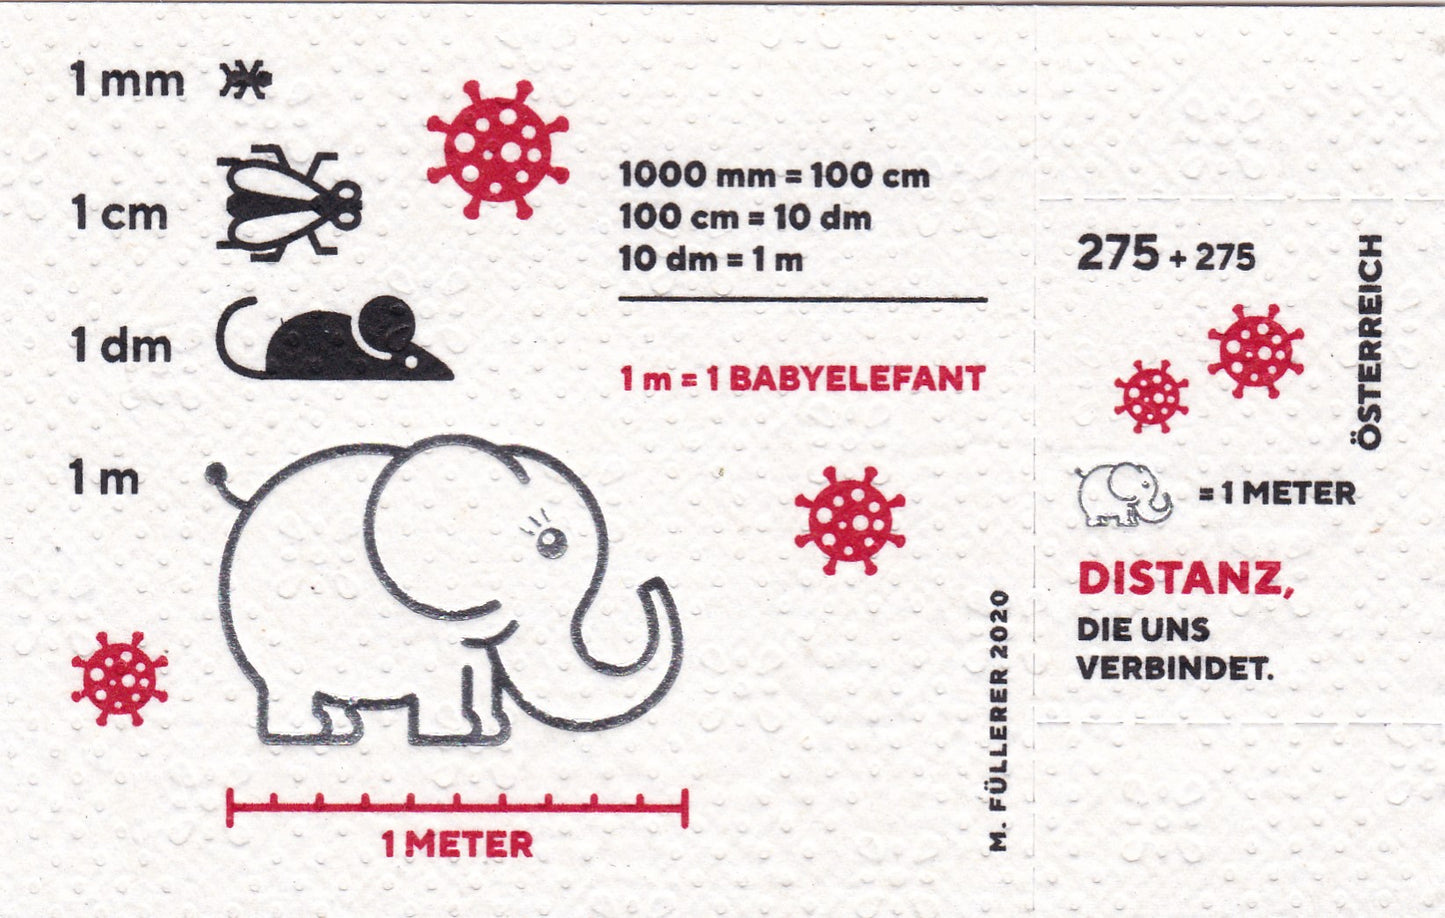 Austria 2020 World's first stamp made of paper napkin/tissue paper.